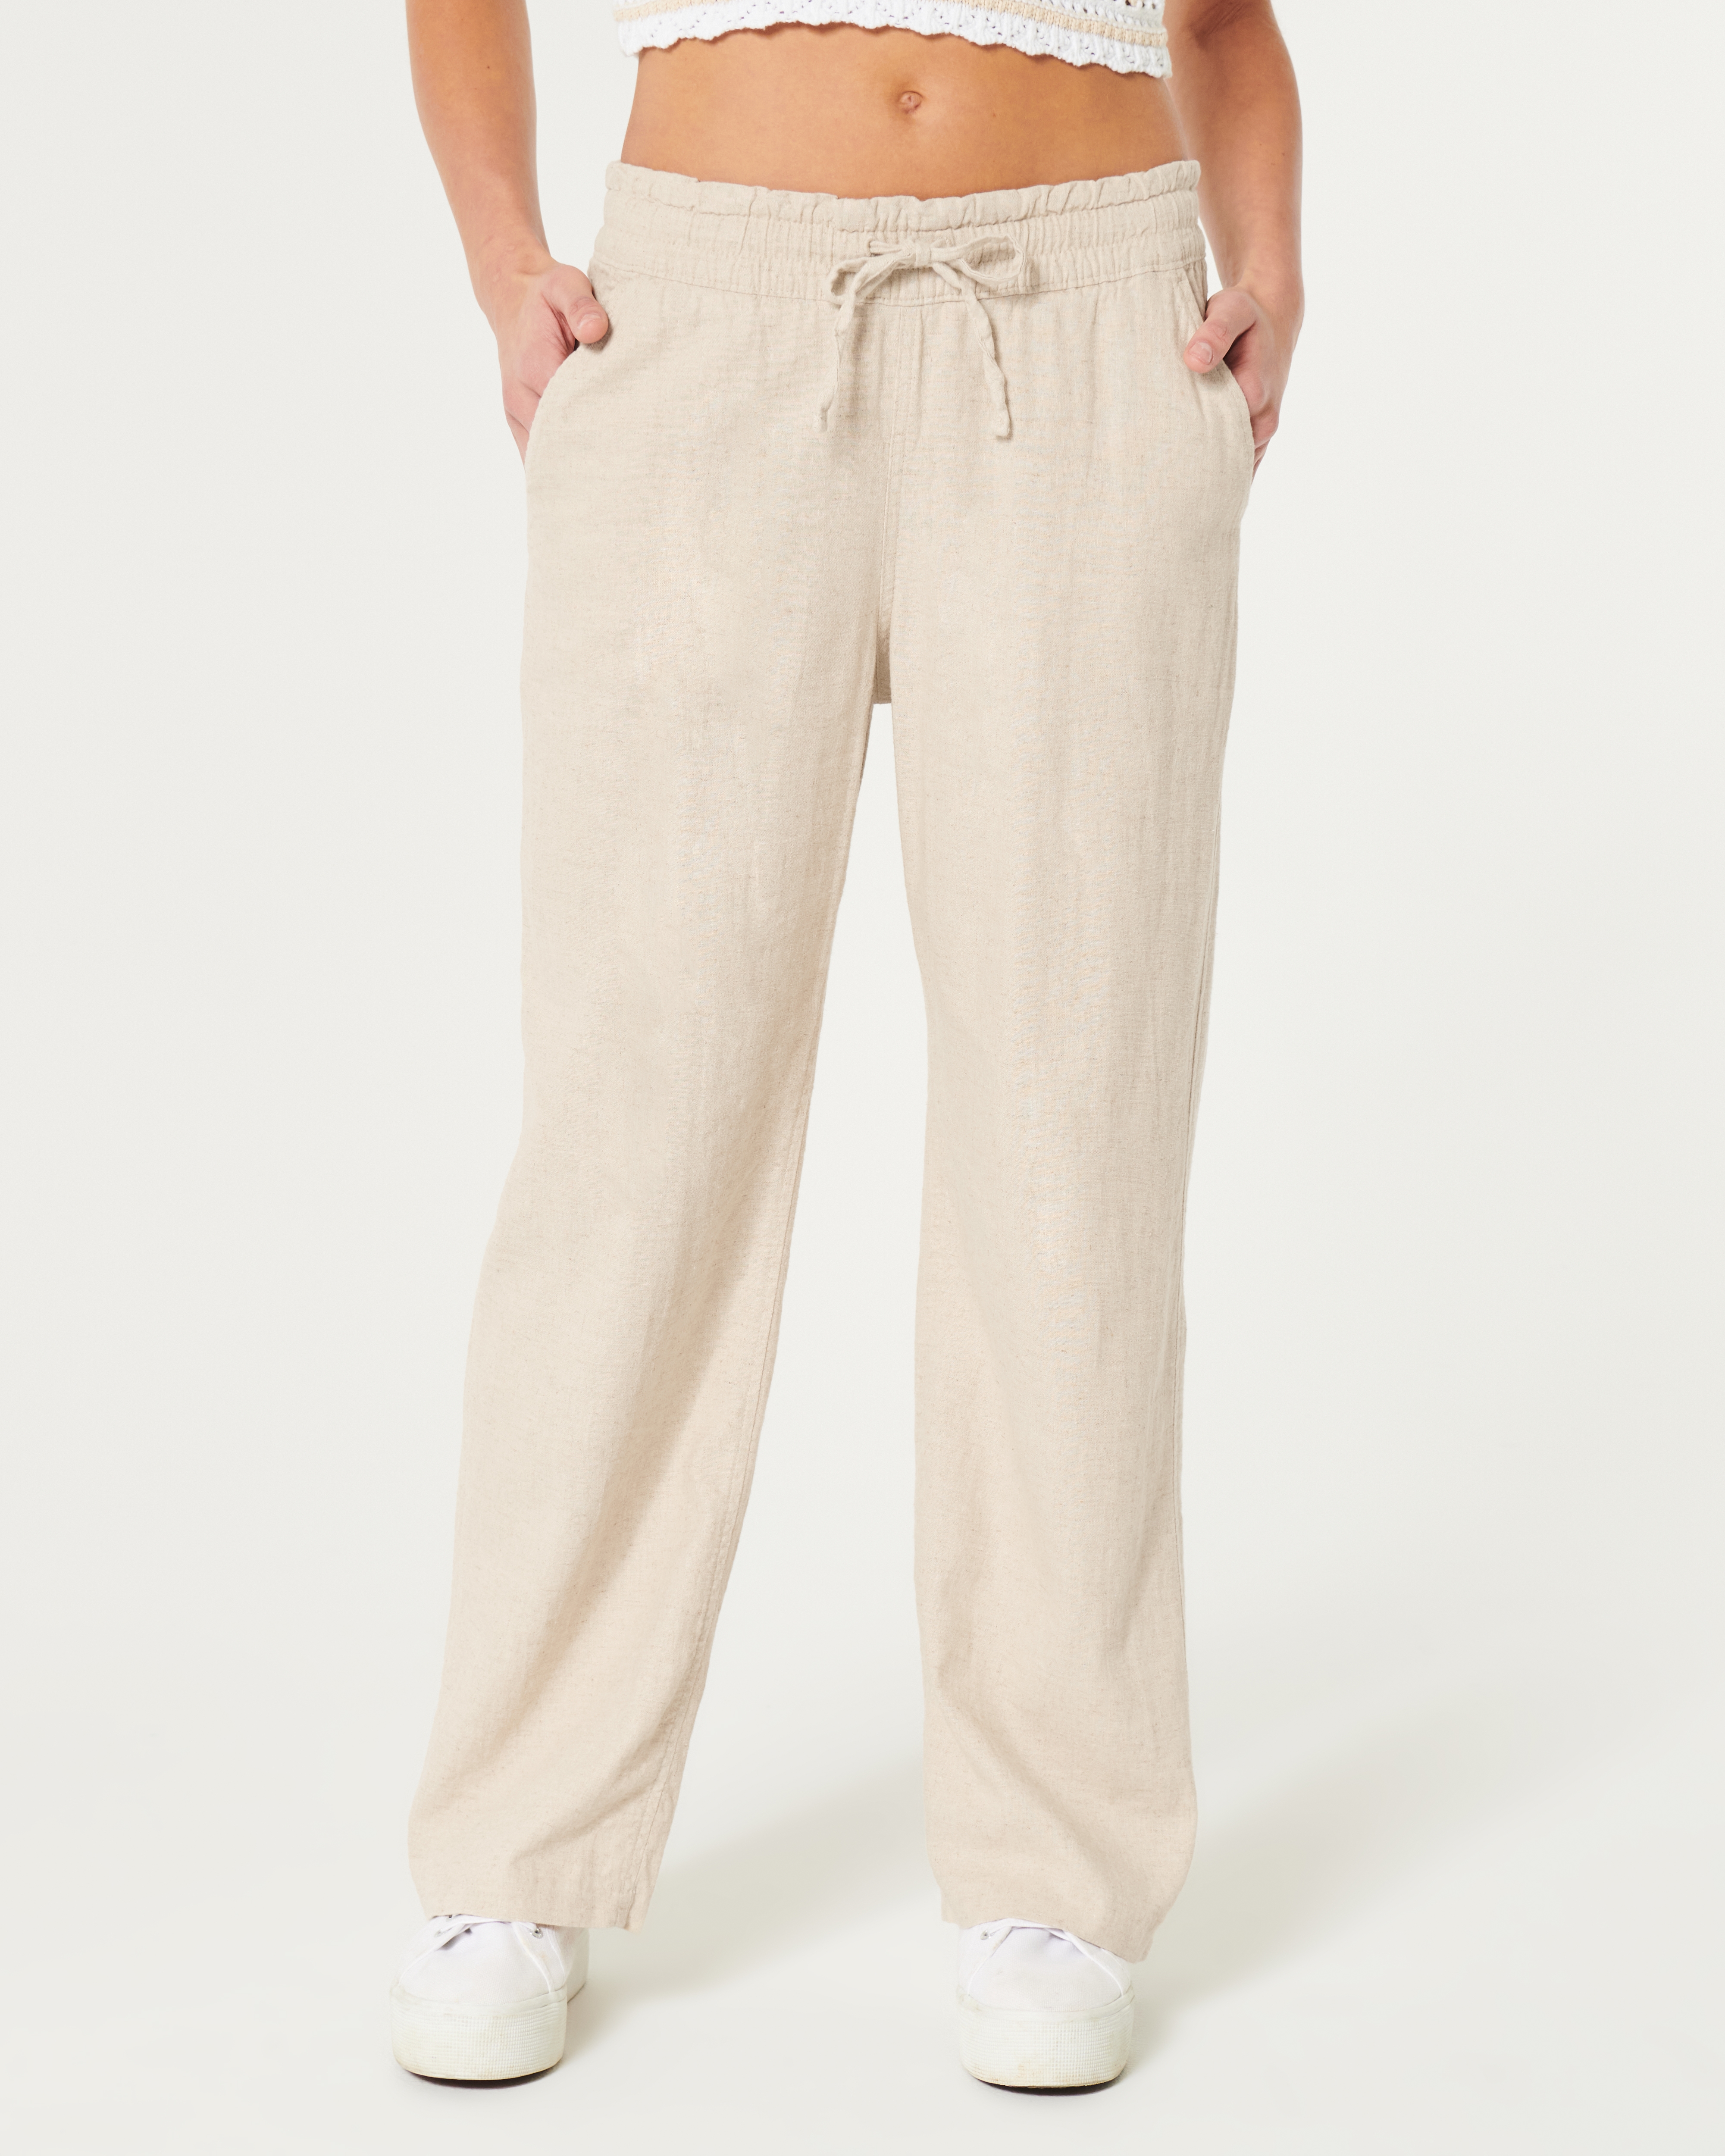 Adjustable Rise Pull-On Linen Blend Baggy Pants